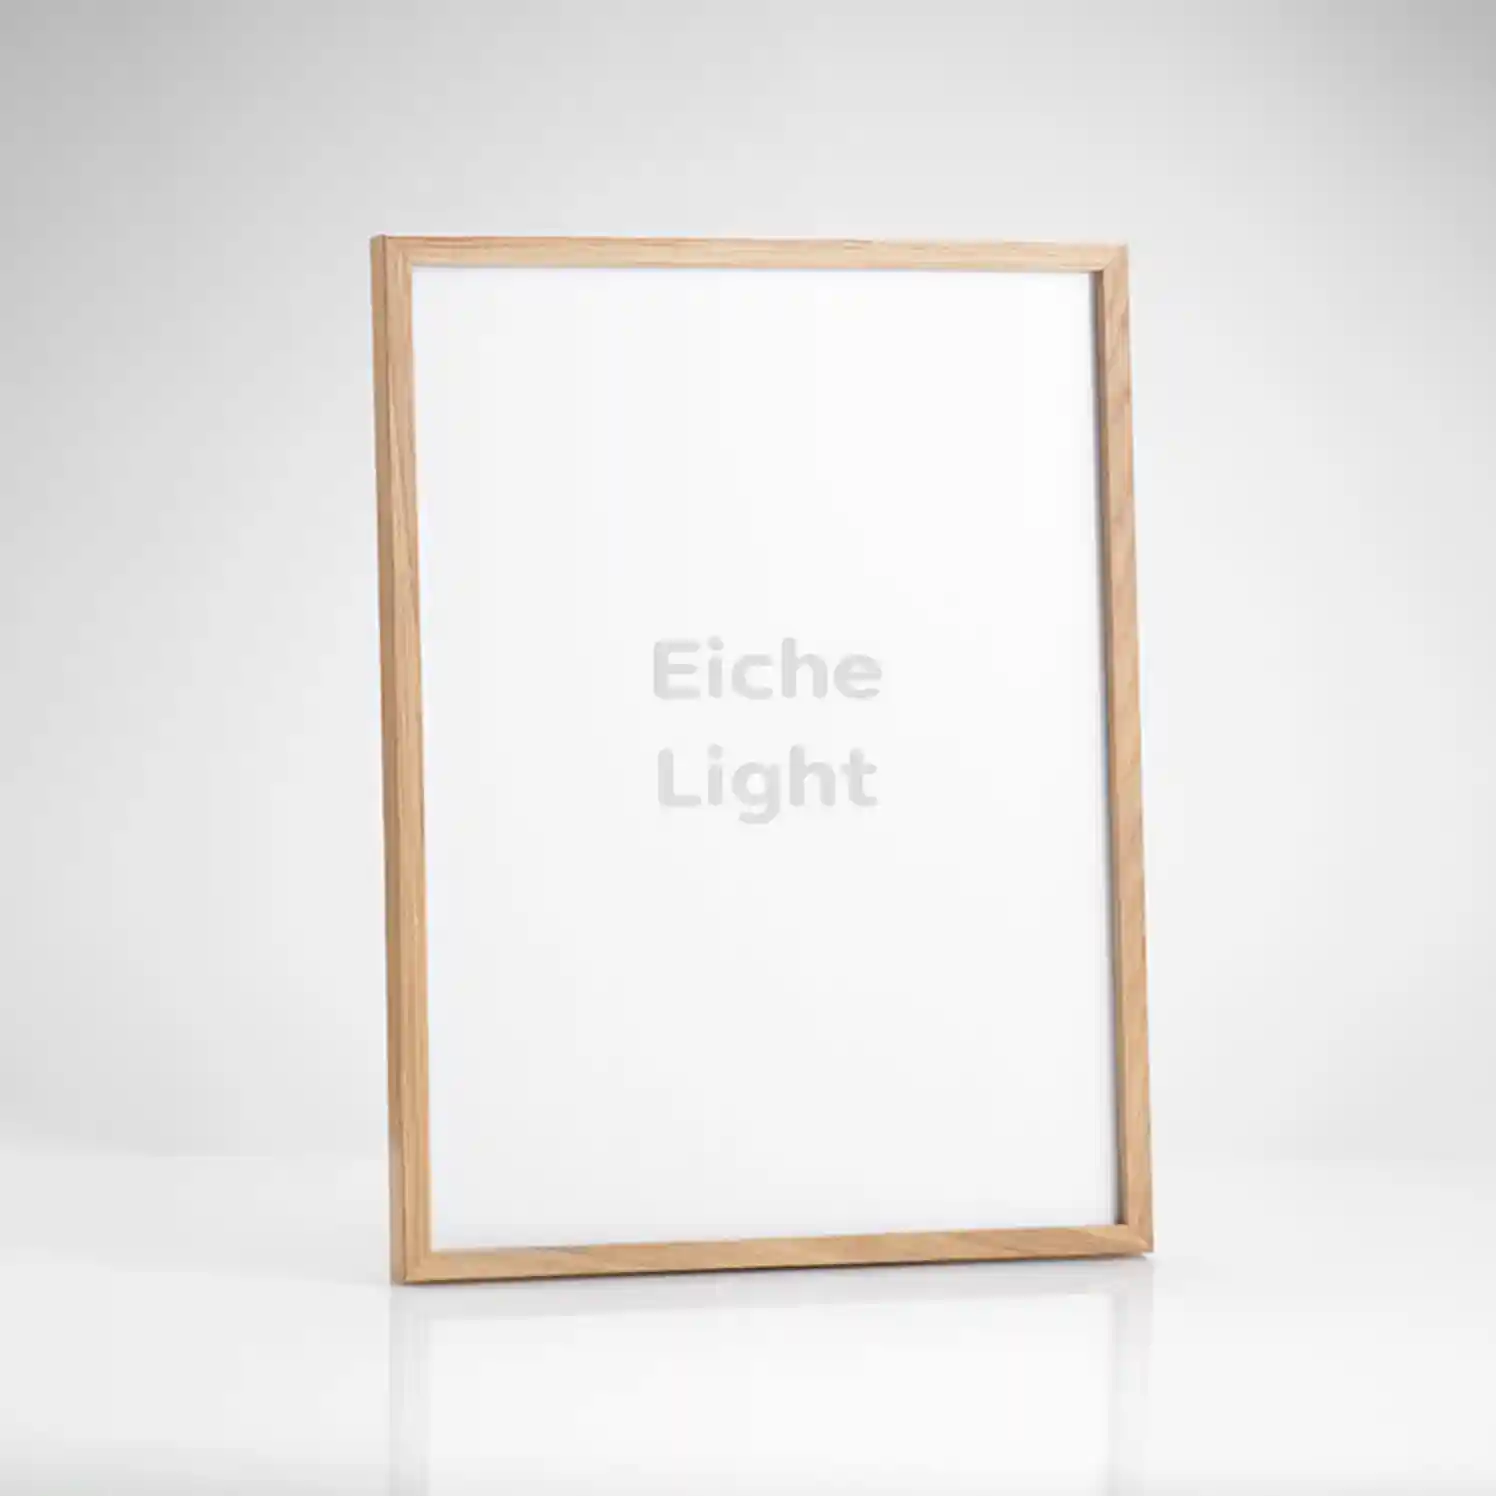 Bilderrahmen - Eiche Light - A4 - 21 x 29 cm